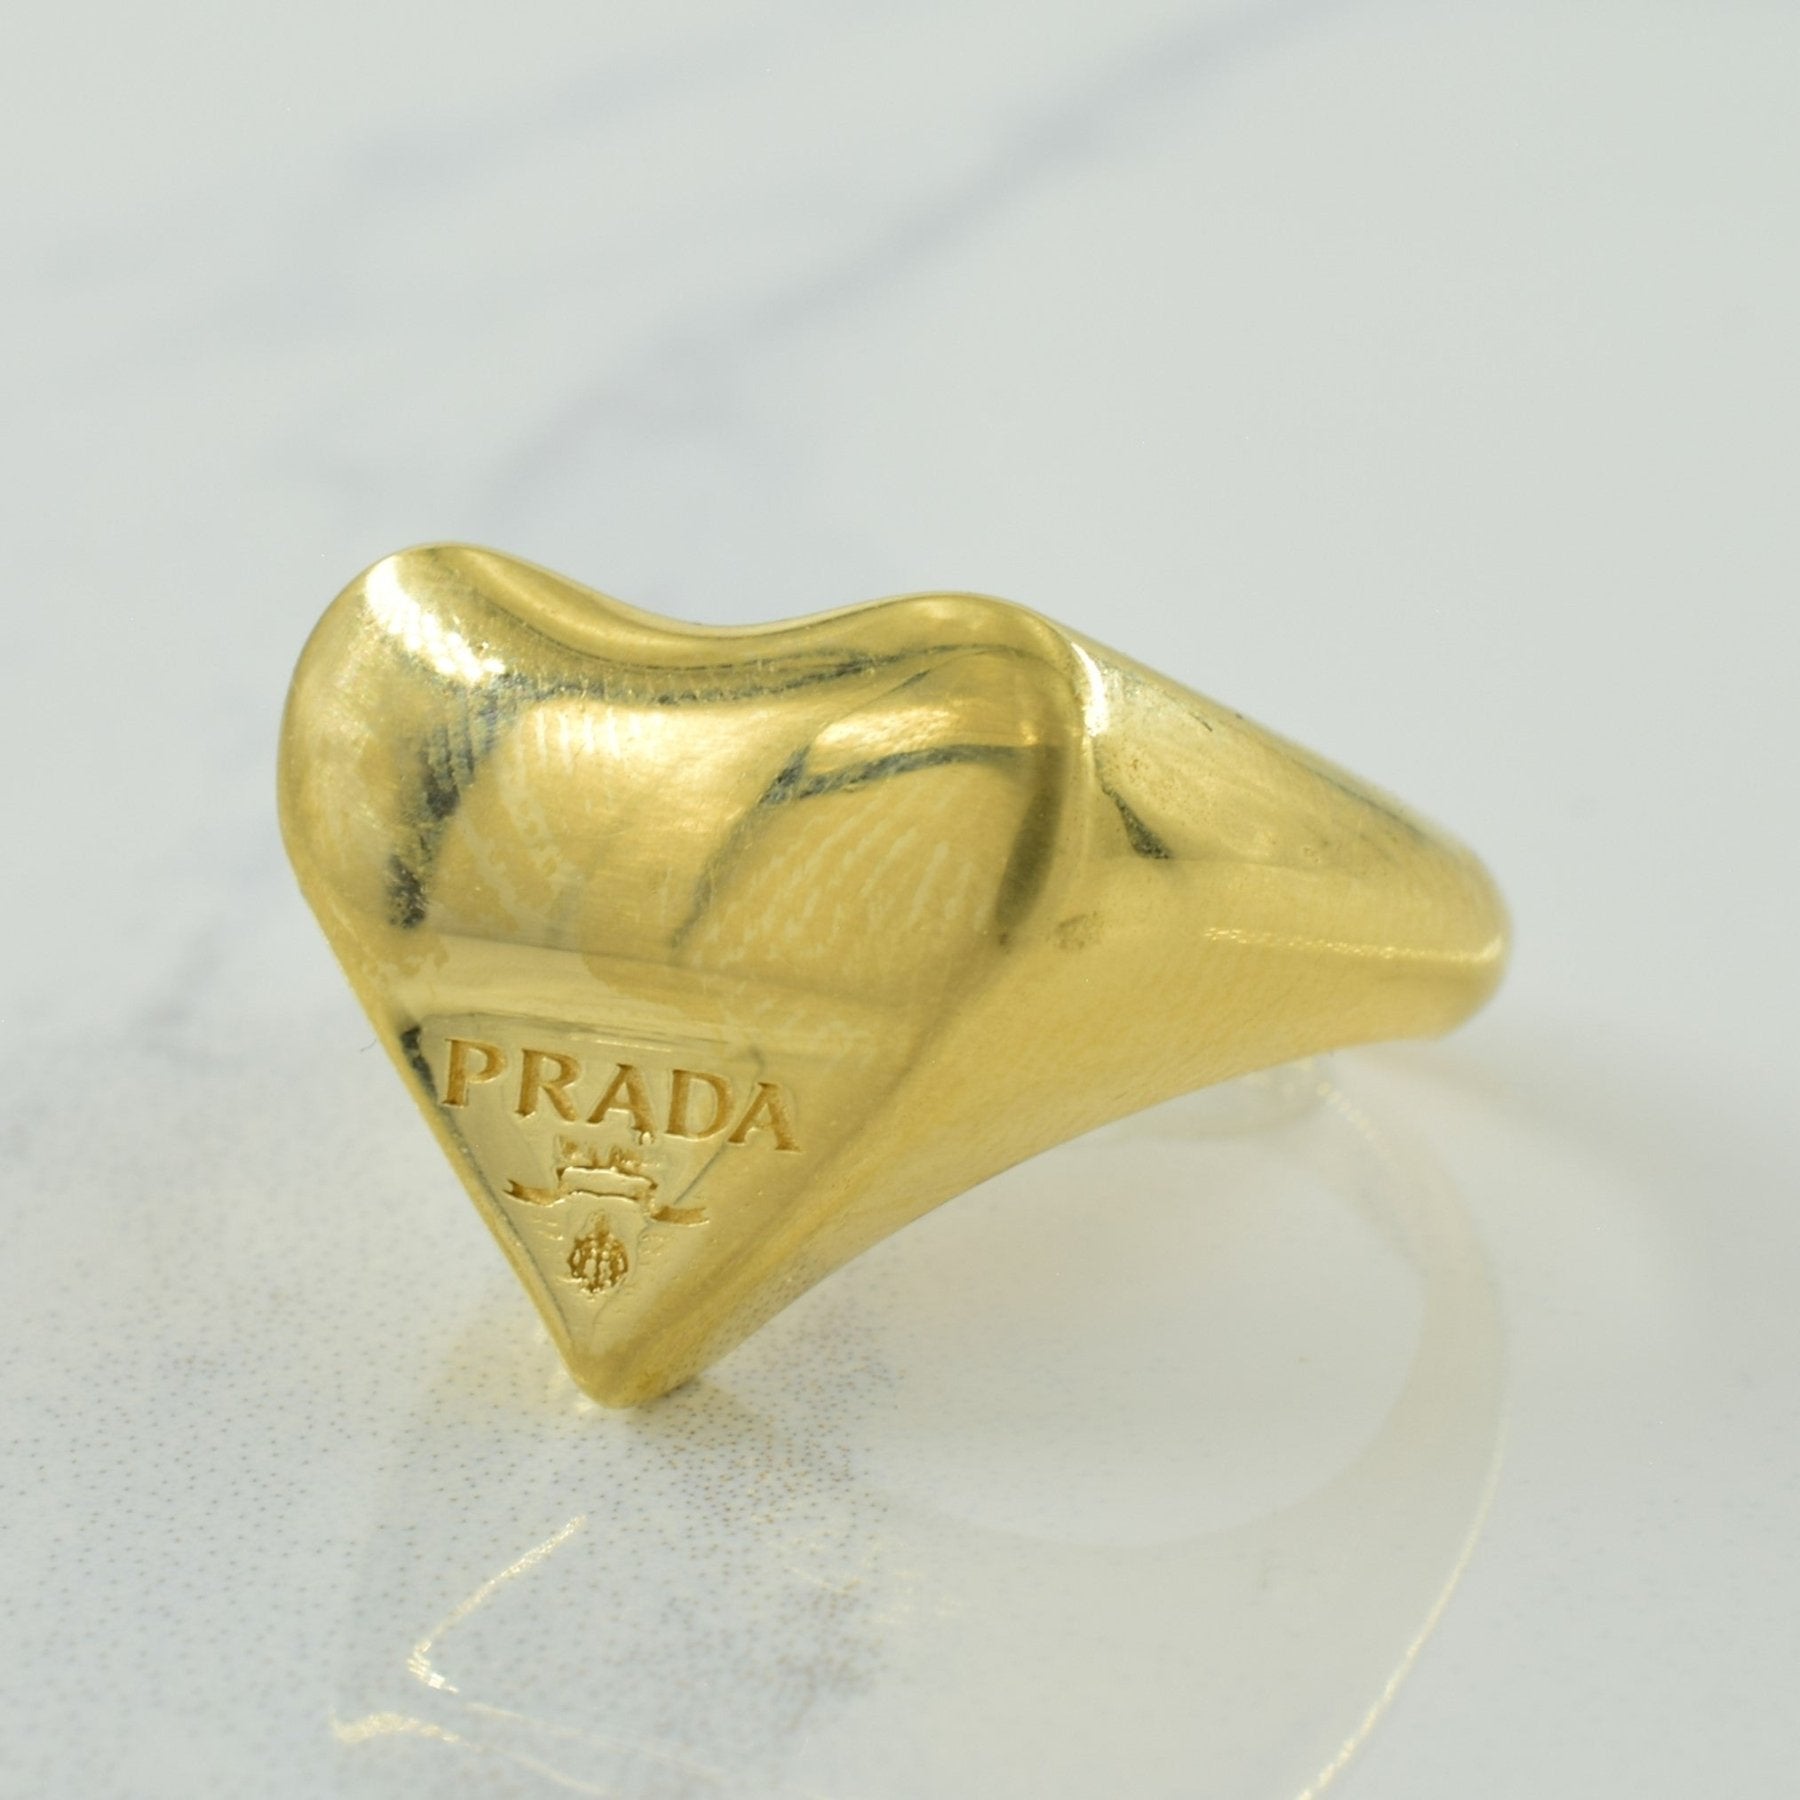 'Prada' 18k Yellow Gold Heart Ring | SZ 7.5 | price check - 100 Ways